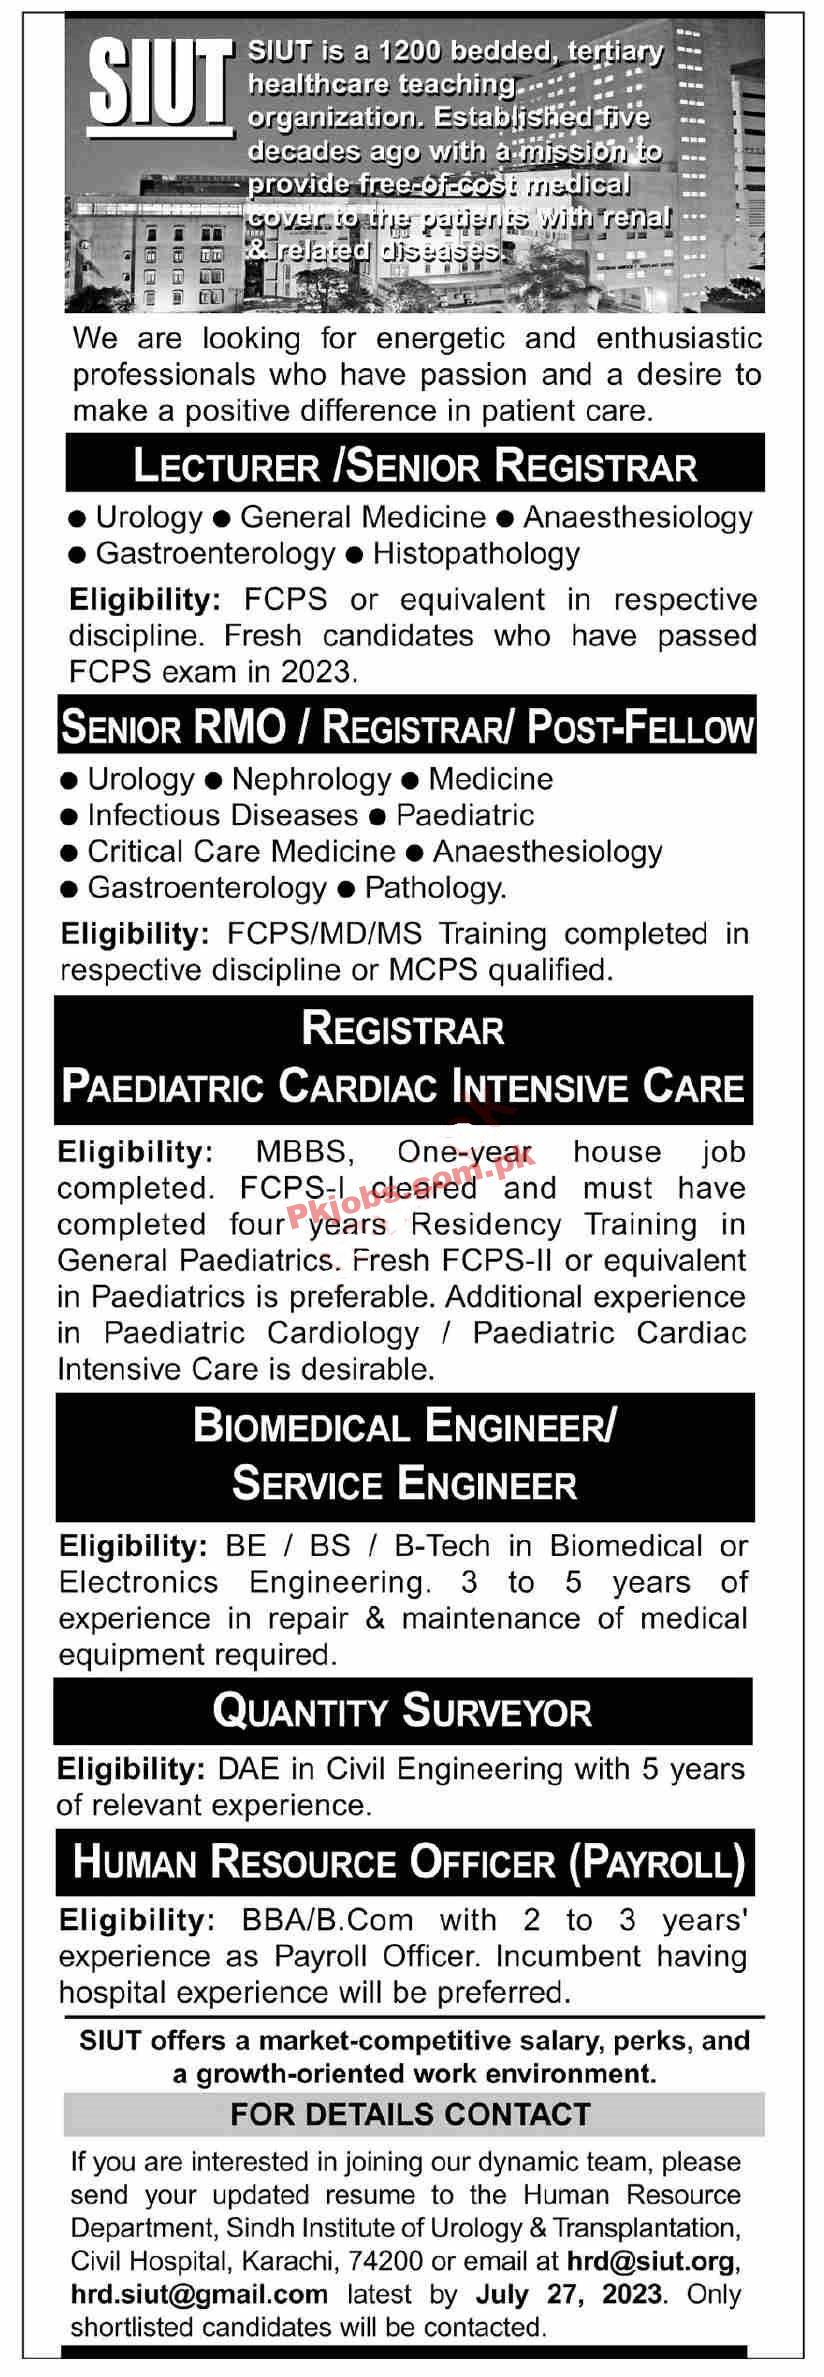 SIUT Jobs 2023 | Latest Sindh Institute of Urology and Transplantation Jobs 2023 | Sindh Institute of Urology and Transplantation Announced Latest Jobs 2023